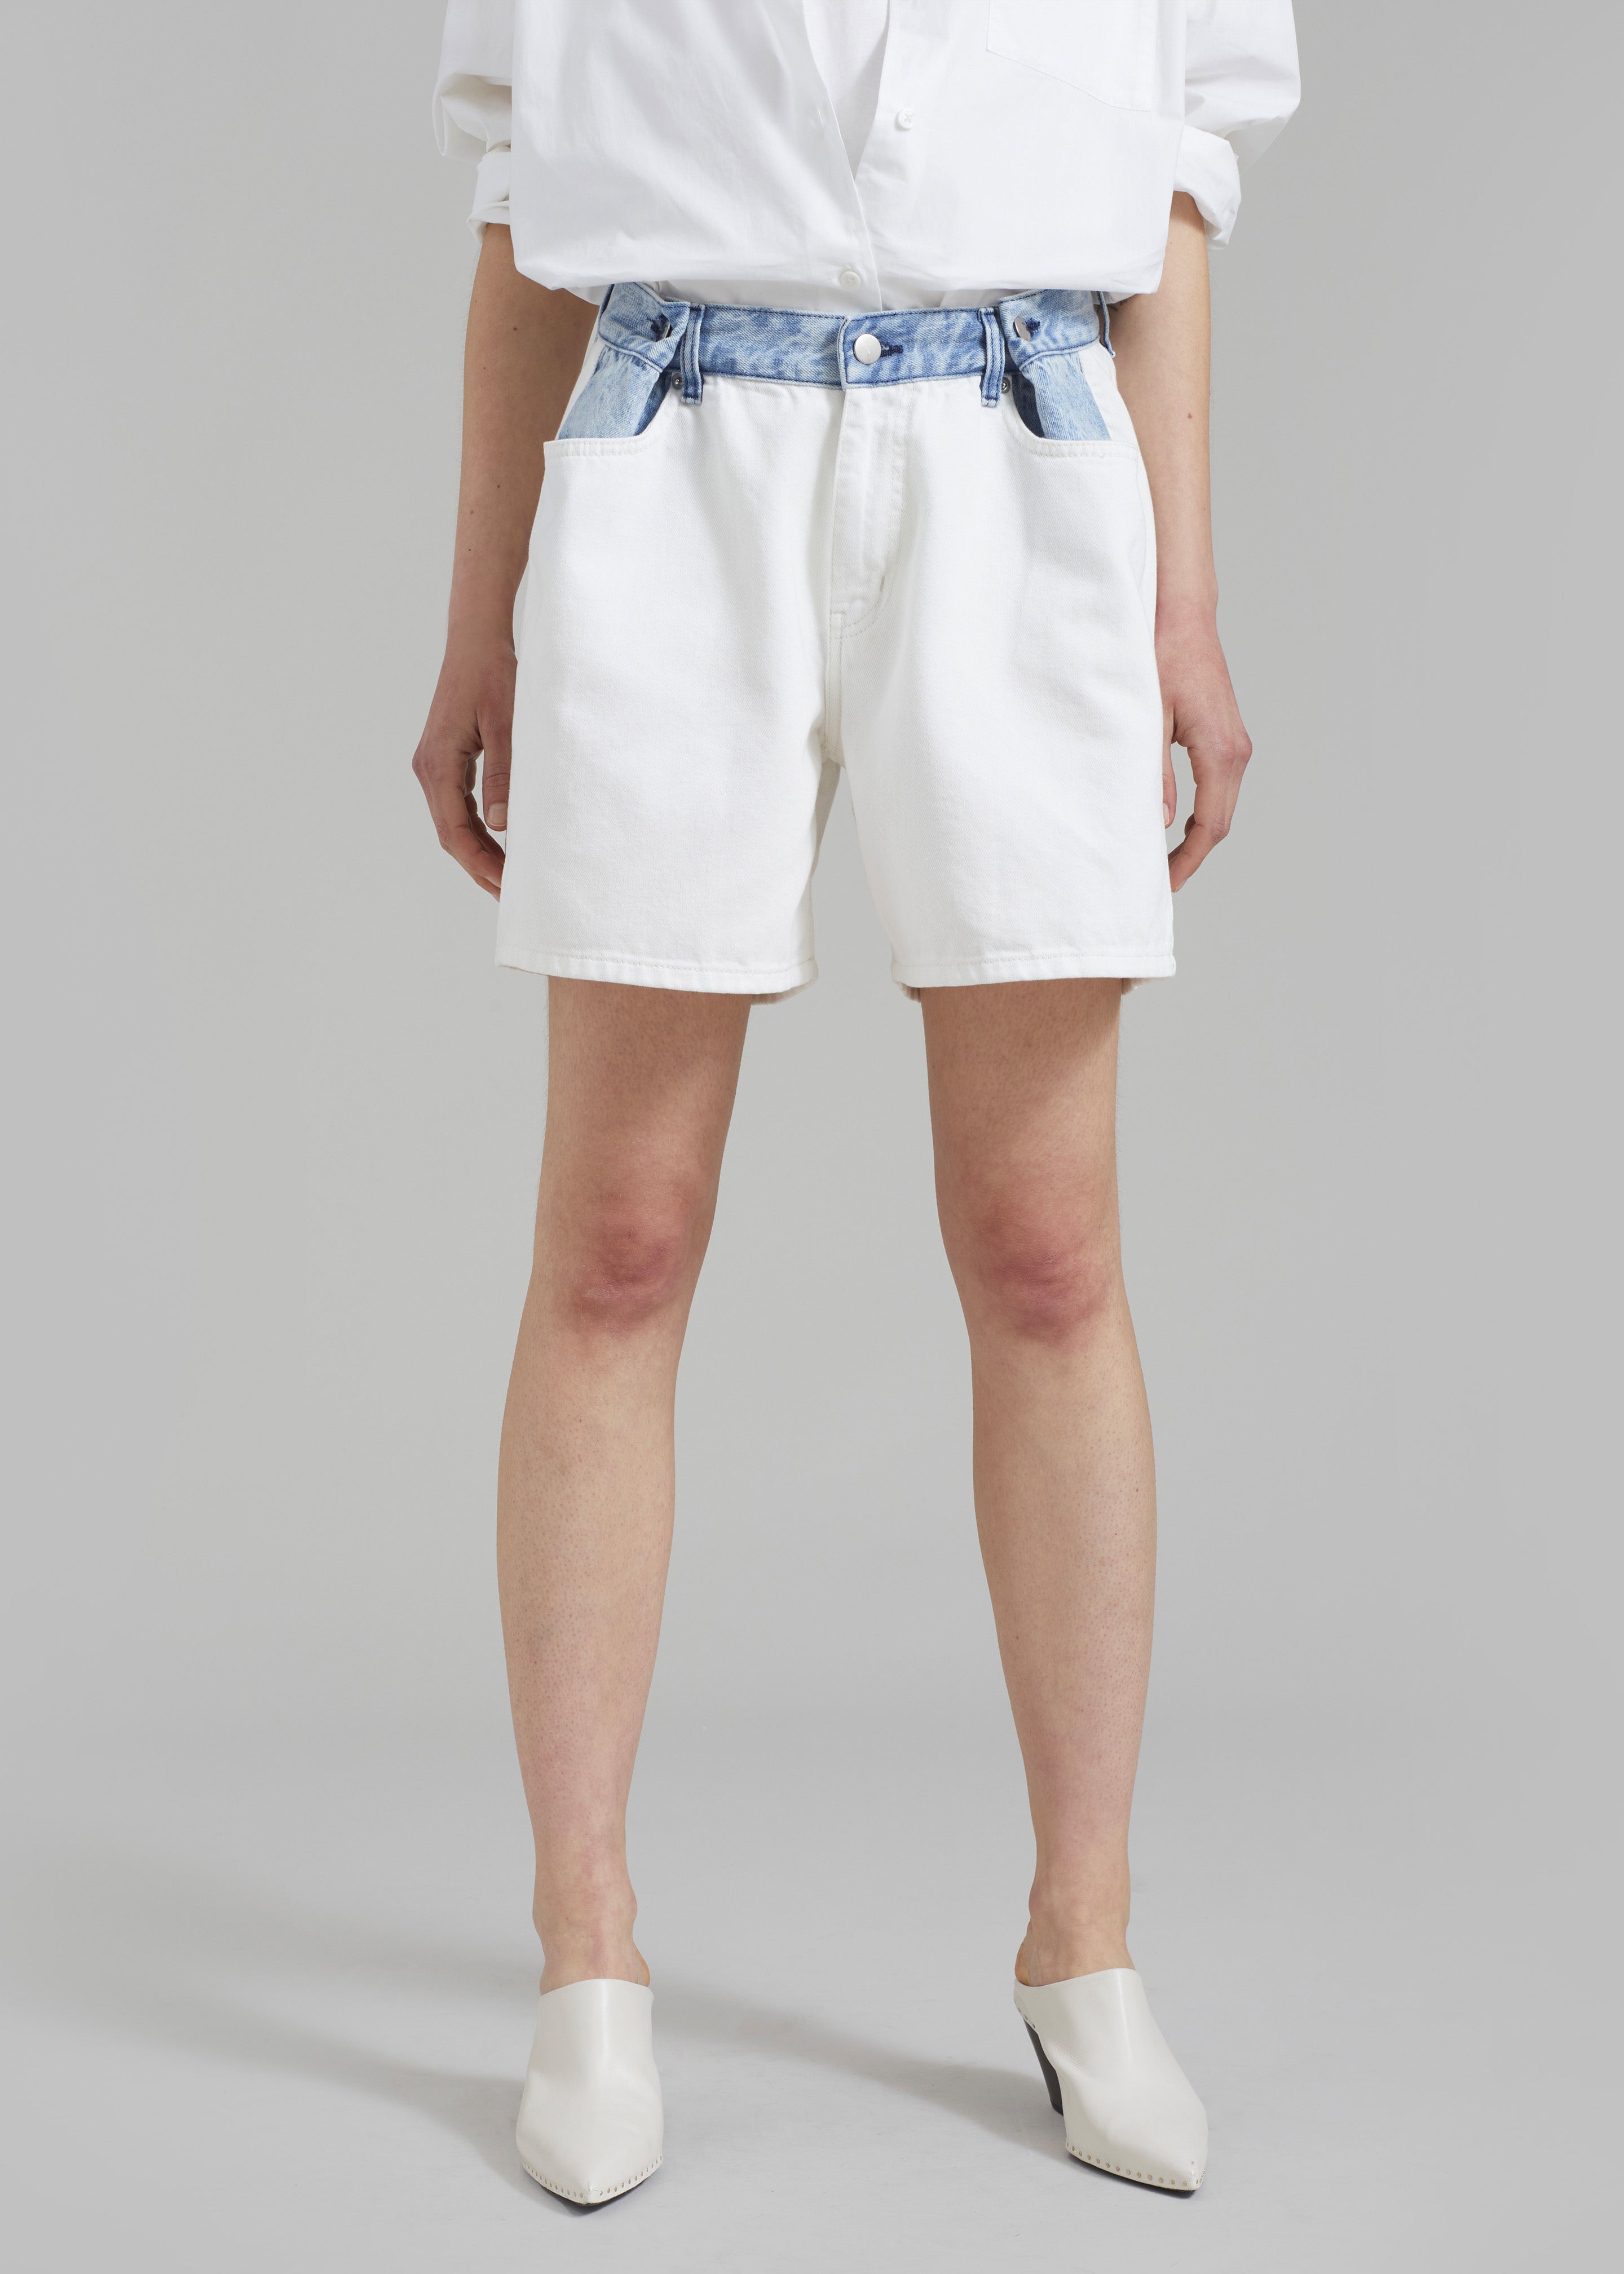 Hayla Contrast Denim Shorts - Off White/Blue - 4